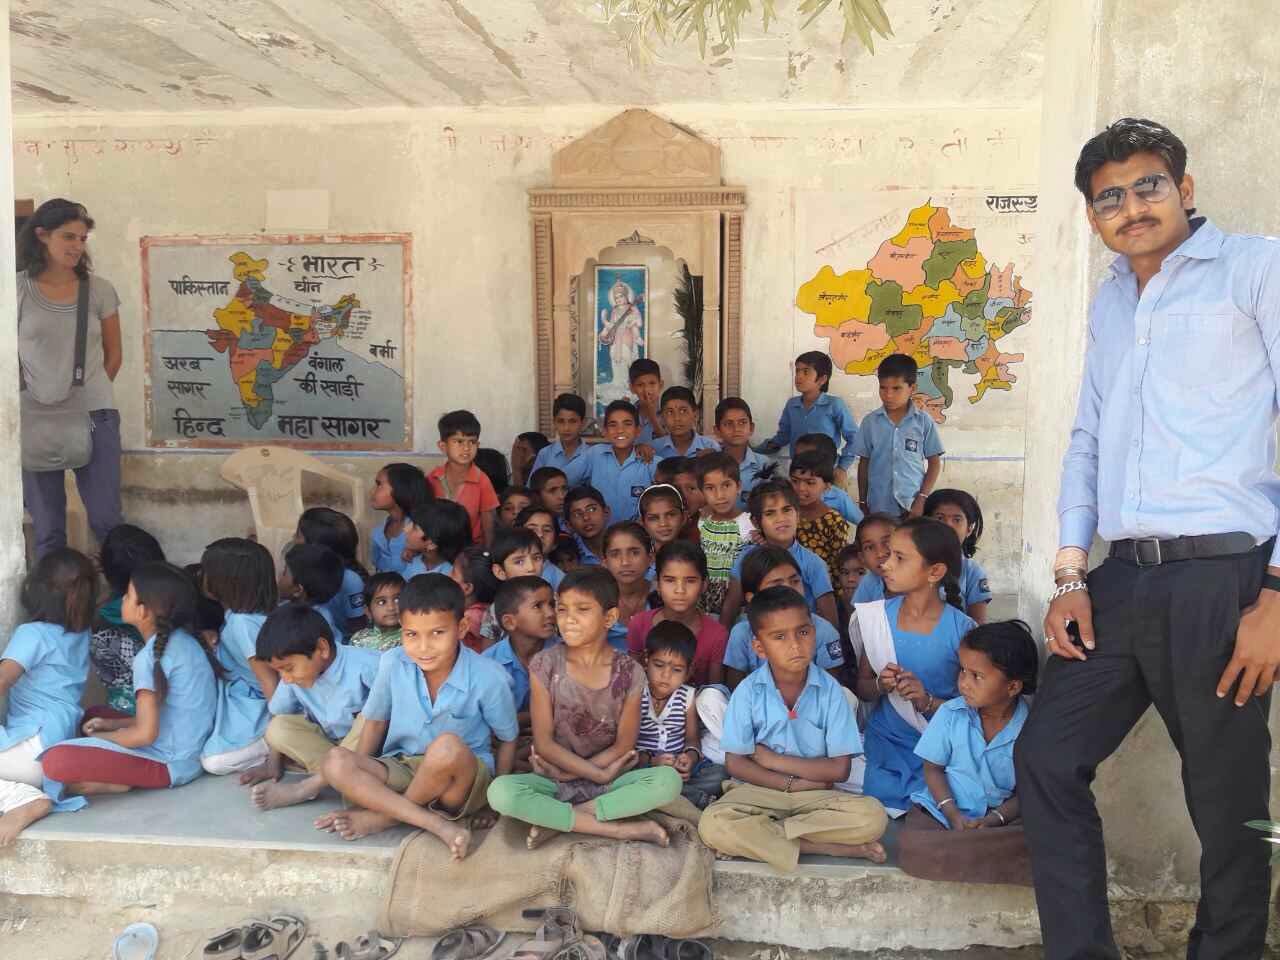 Hari visiting the children at school